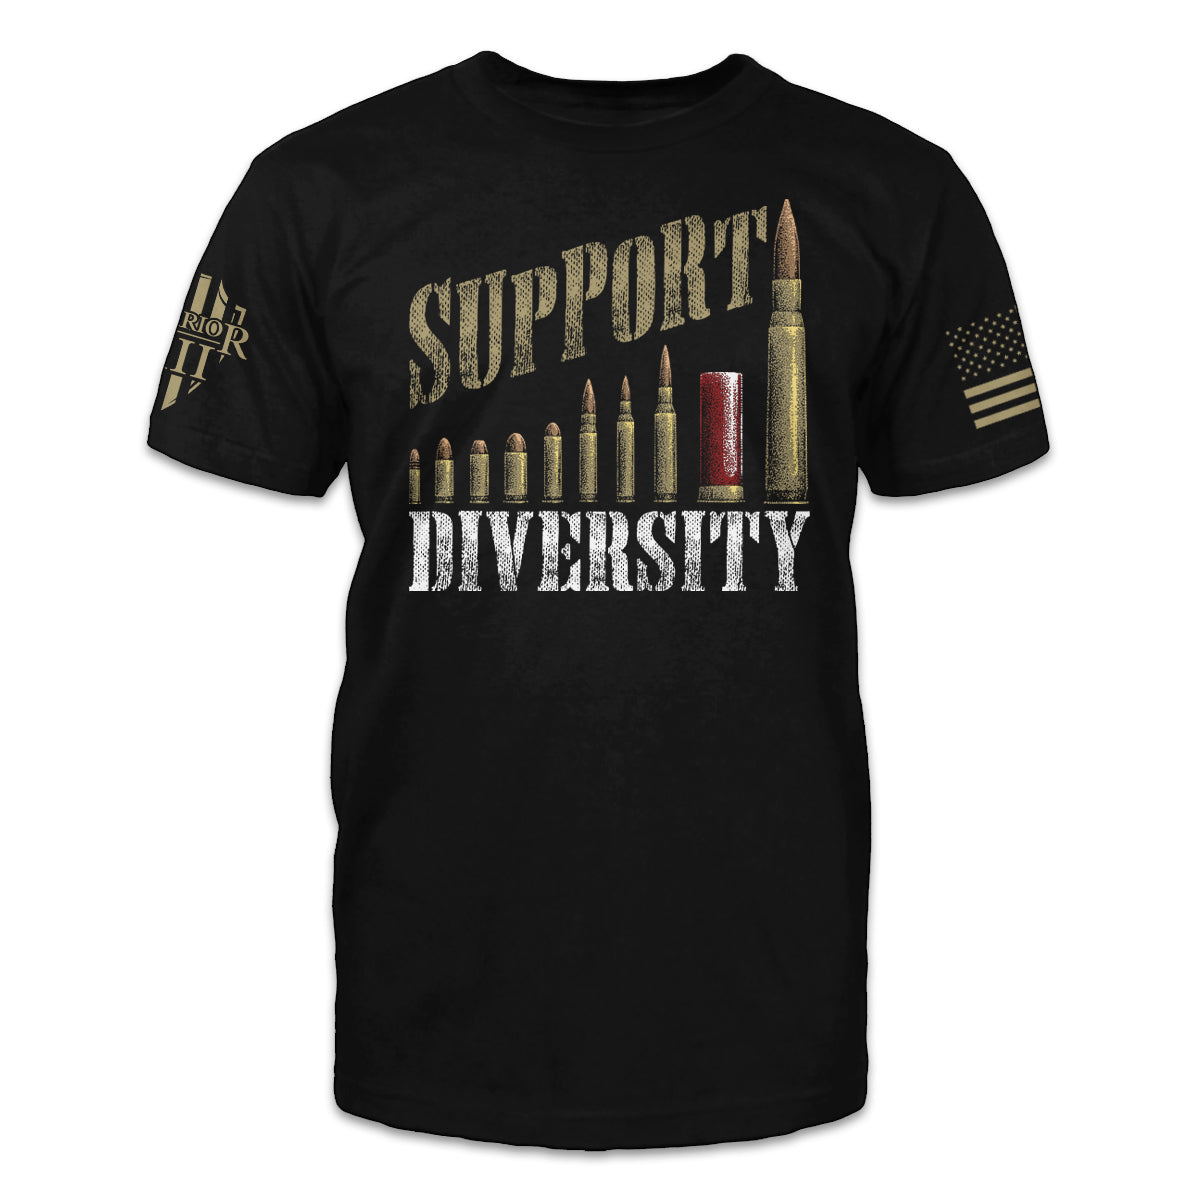 Support Diversity